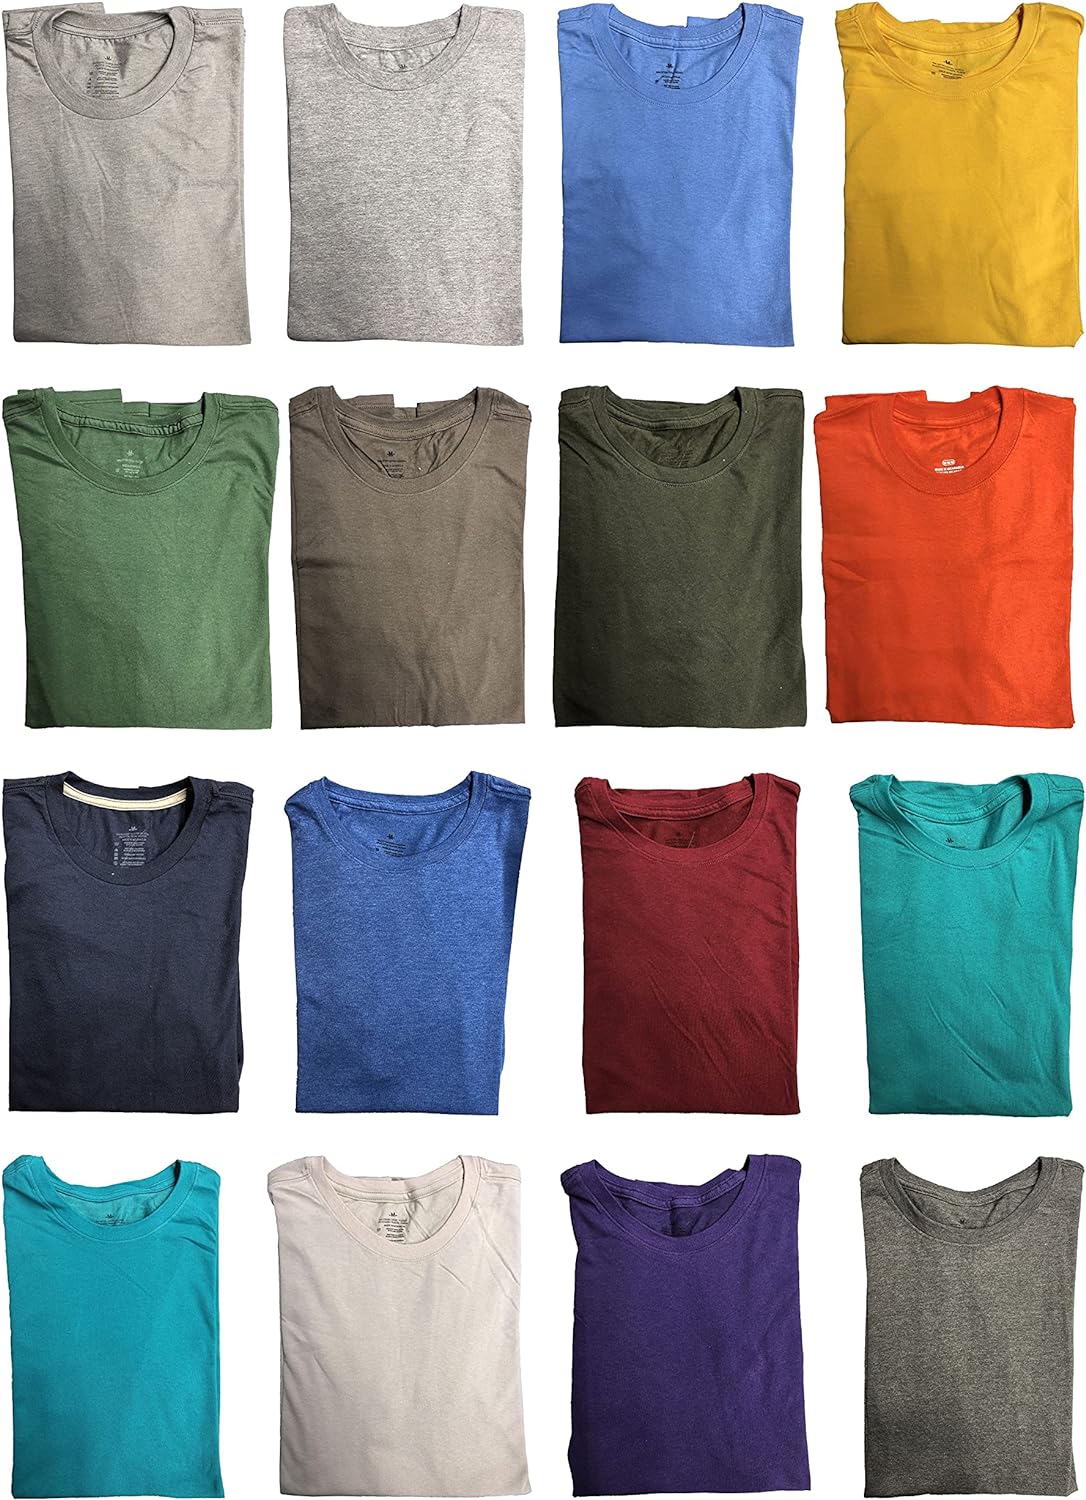 SOCKS'NBULK Mens Cotton Crew Neck Short Sleeve T-Shirts Mix Colors Bulk Pack Value Deal (60 PK)